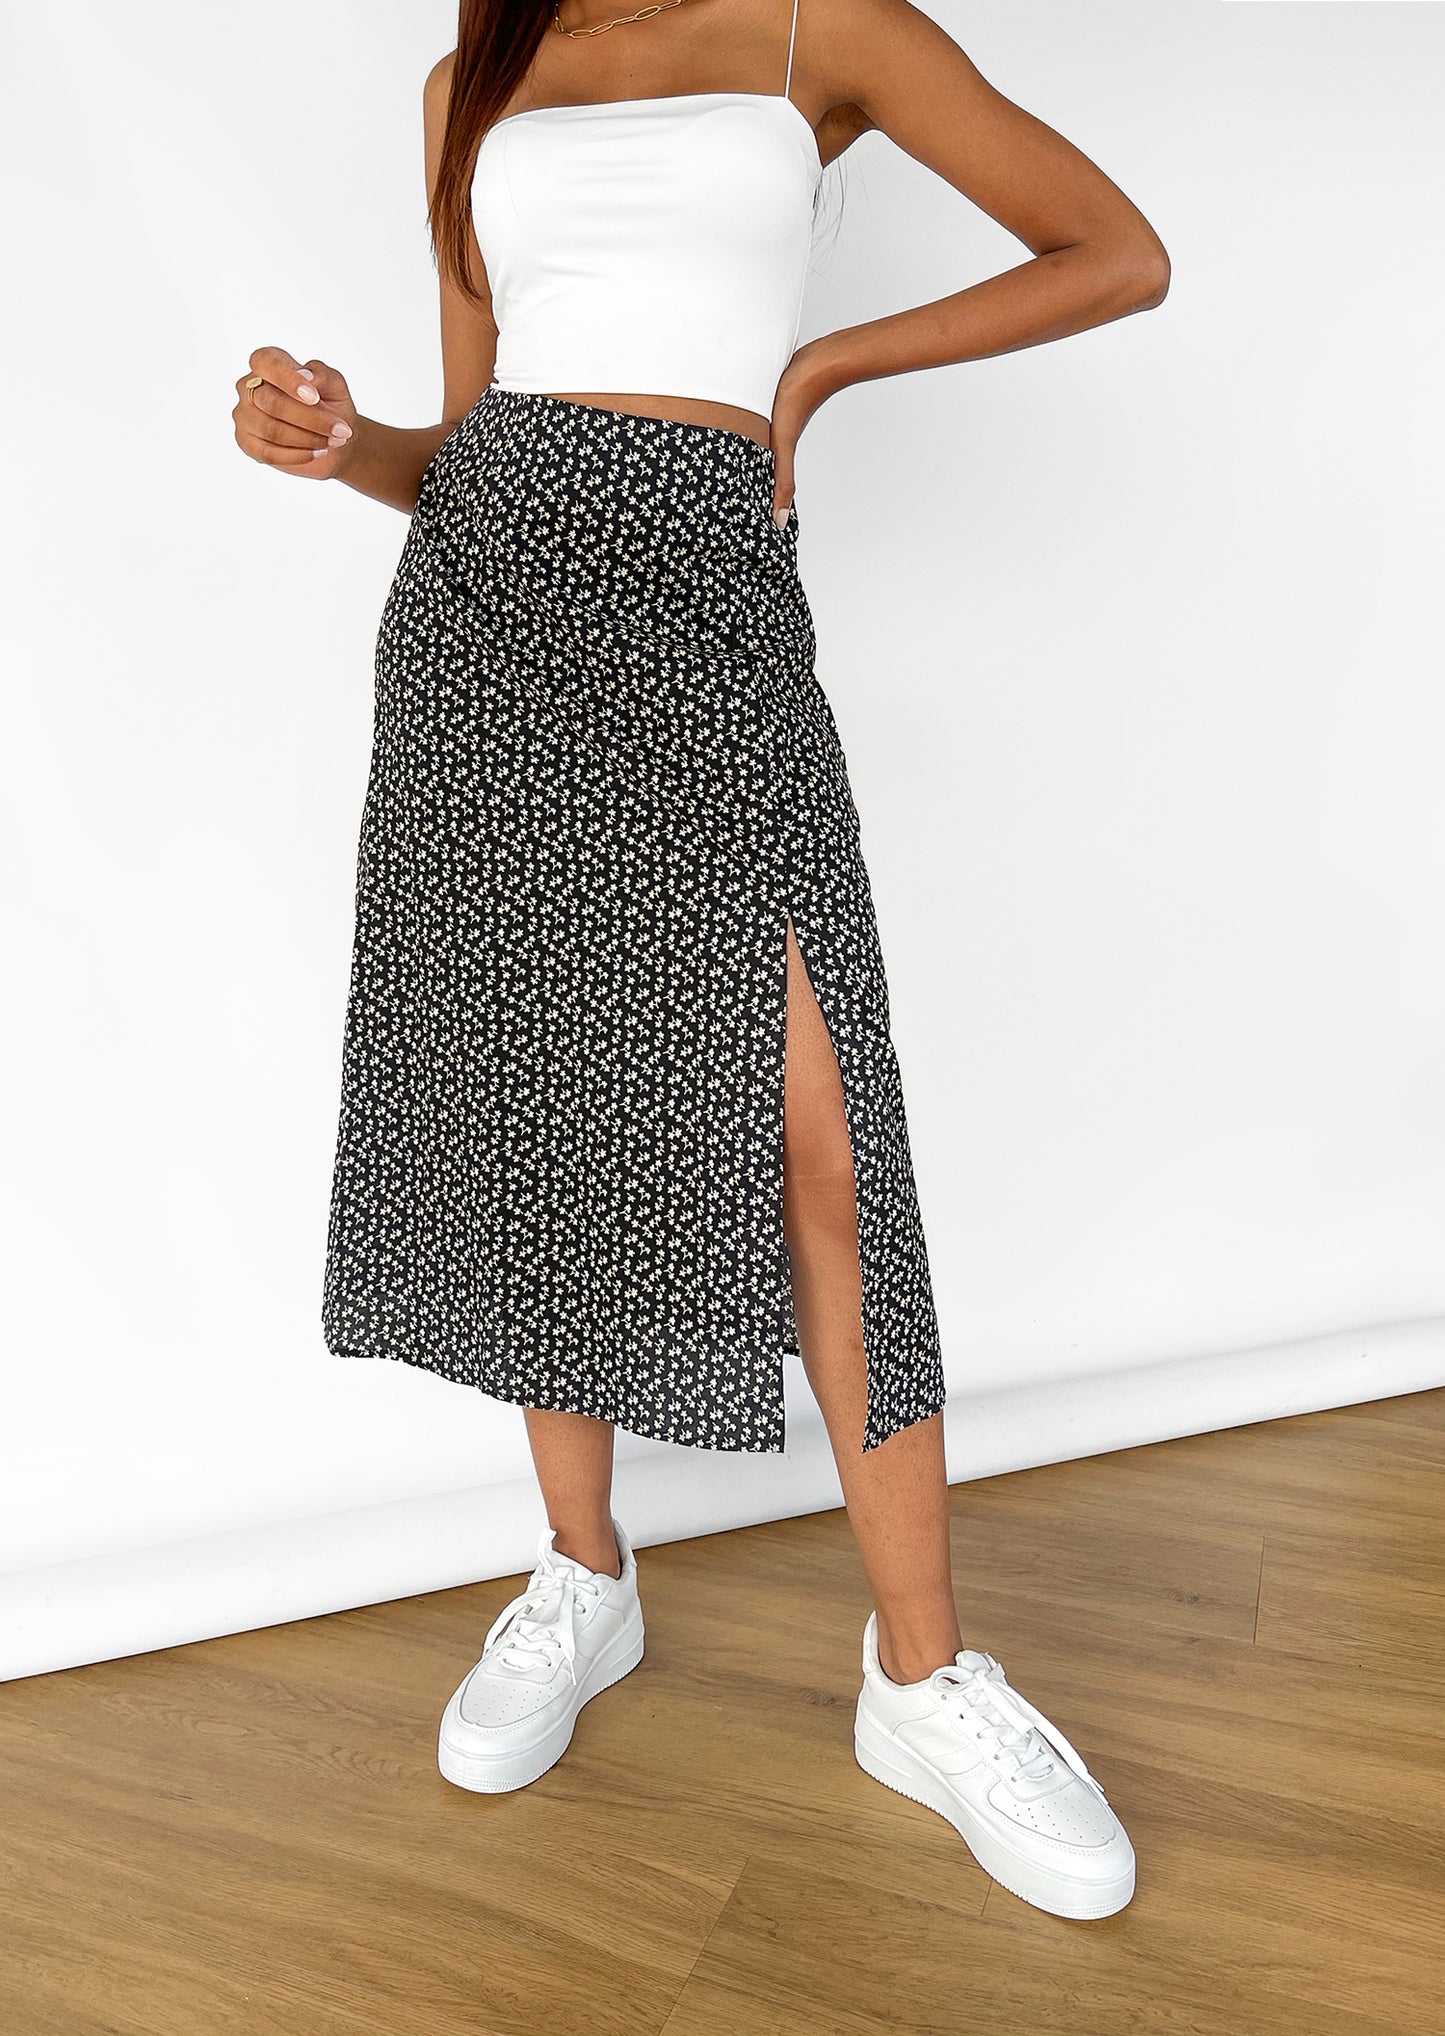 Floral midi skirt with side split in black